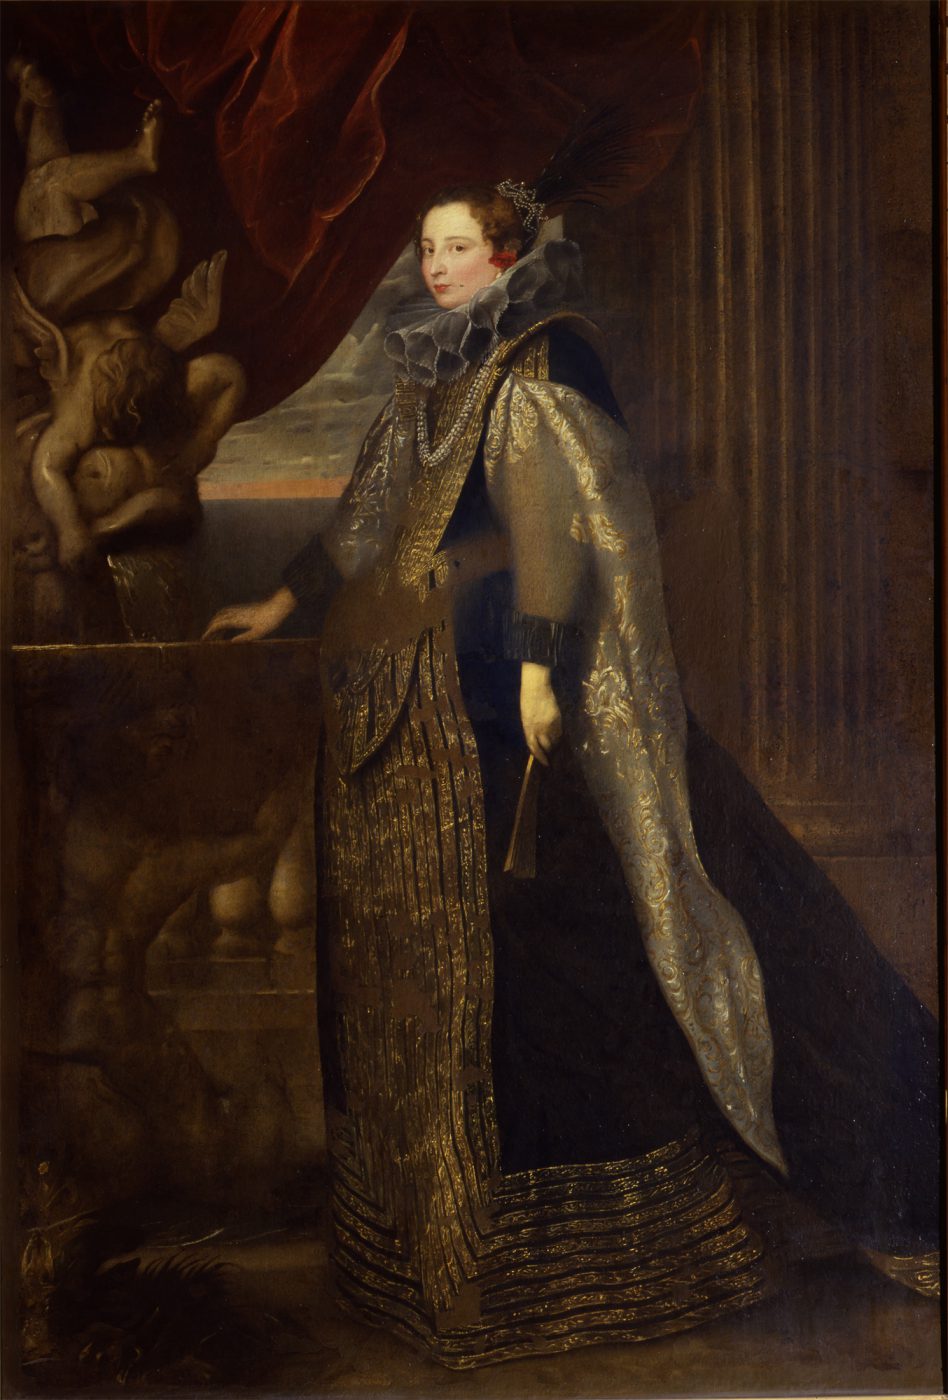 Anthony Van Dyck "Portrait of Caterina Balbi Durazzo"